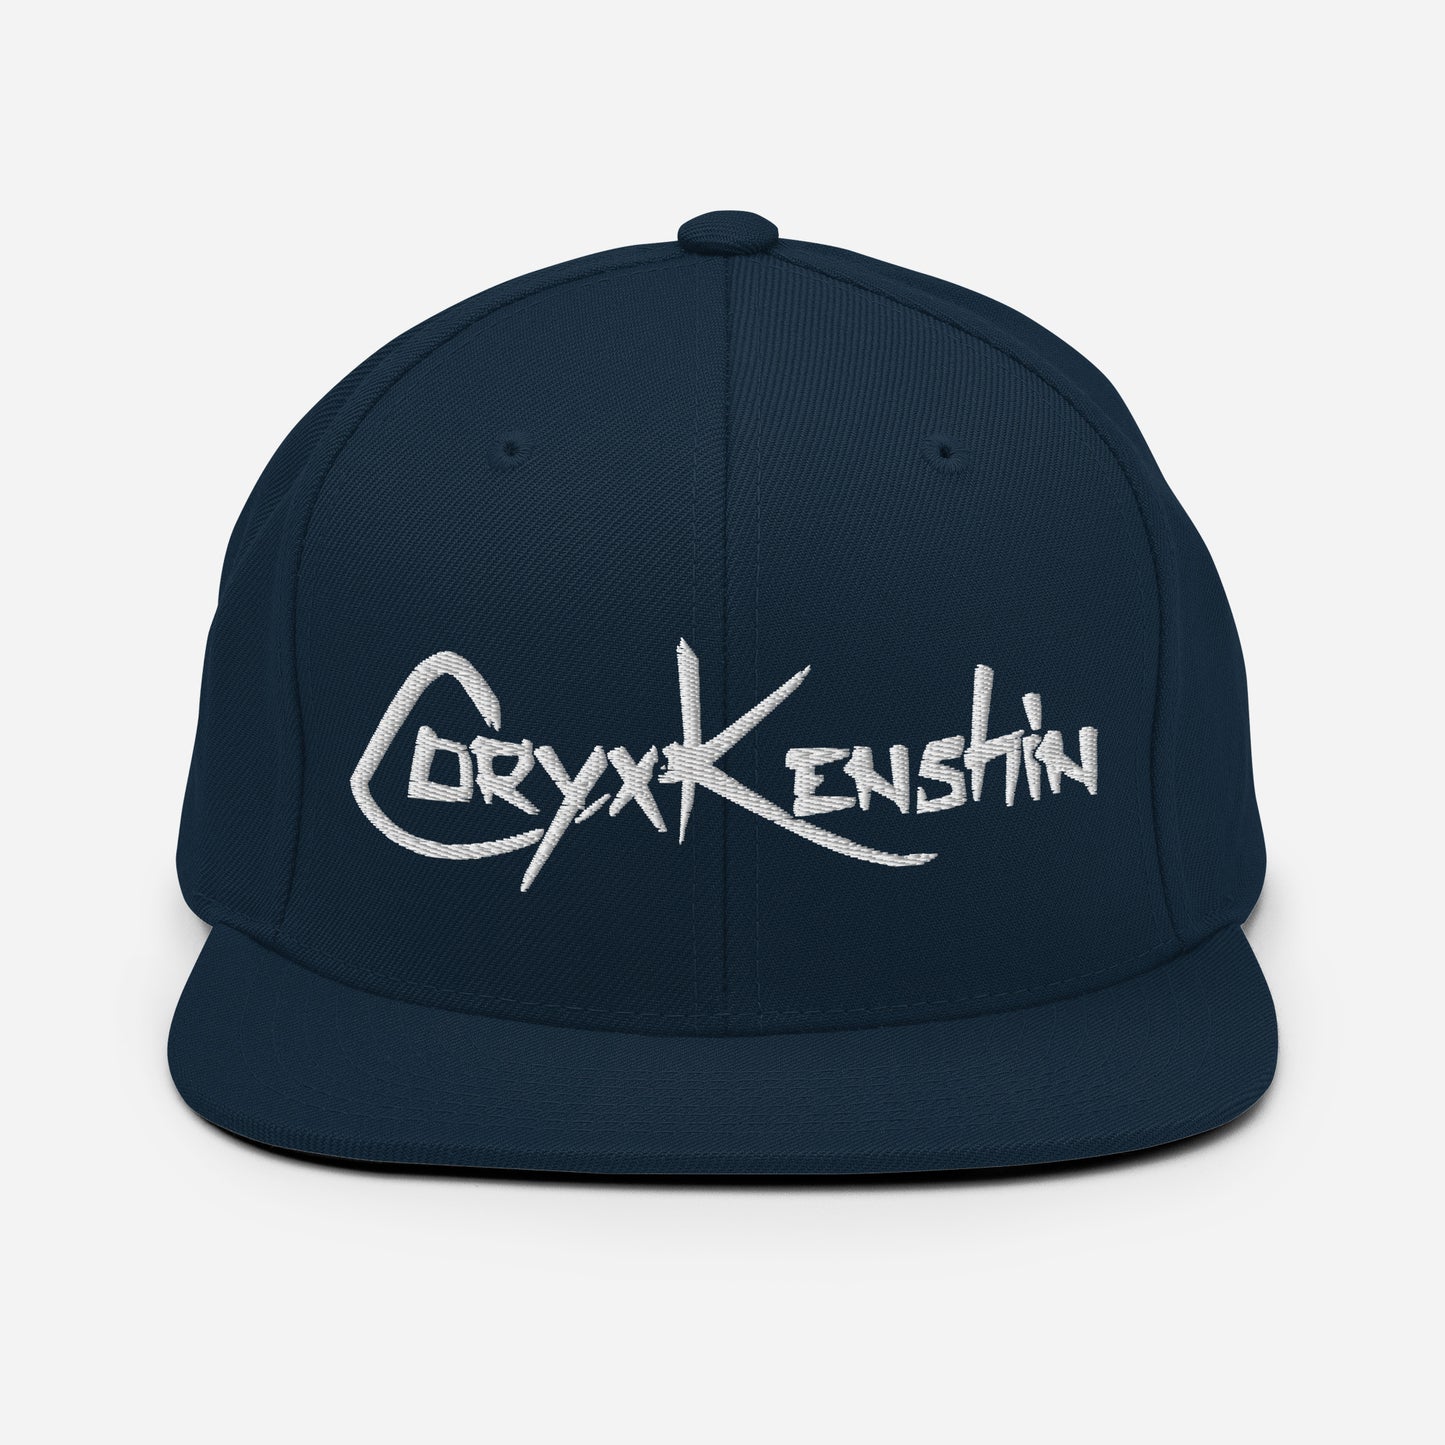 Coryxkenshin Snapback Hat